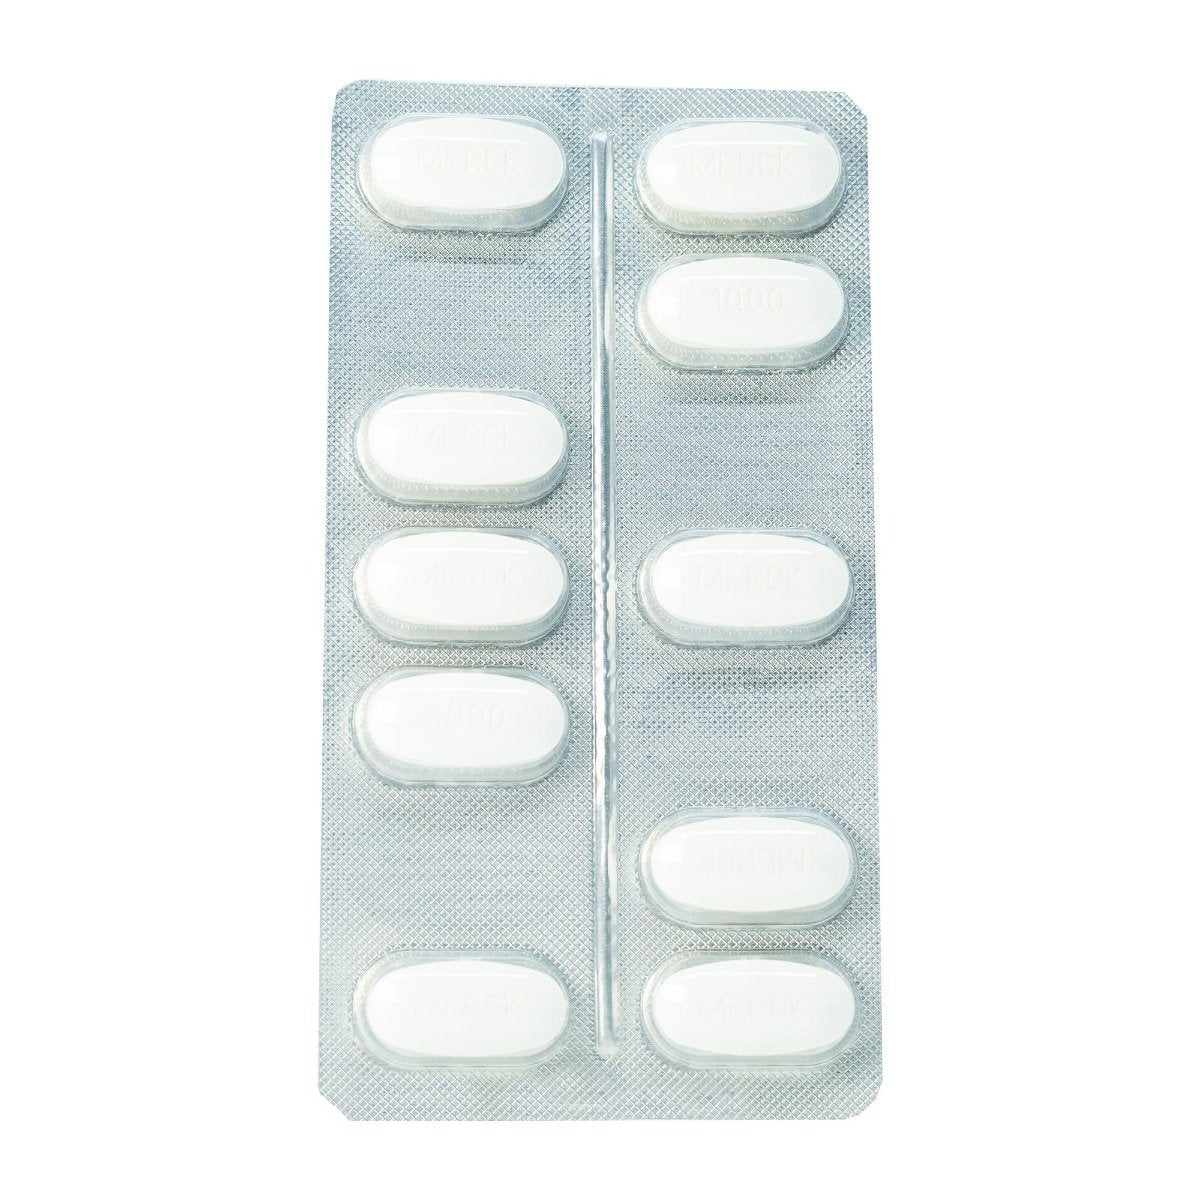 Glucophage XR 1000 mg - 30 Tablets - Bloom Pharmacy